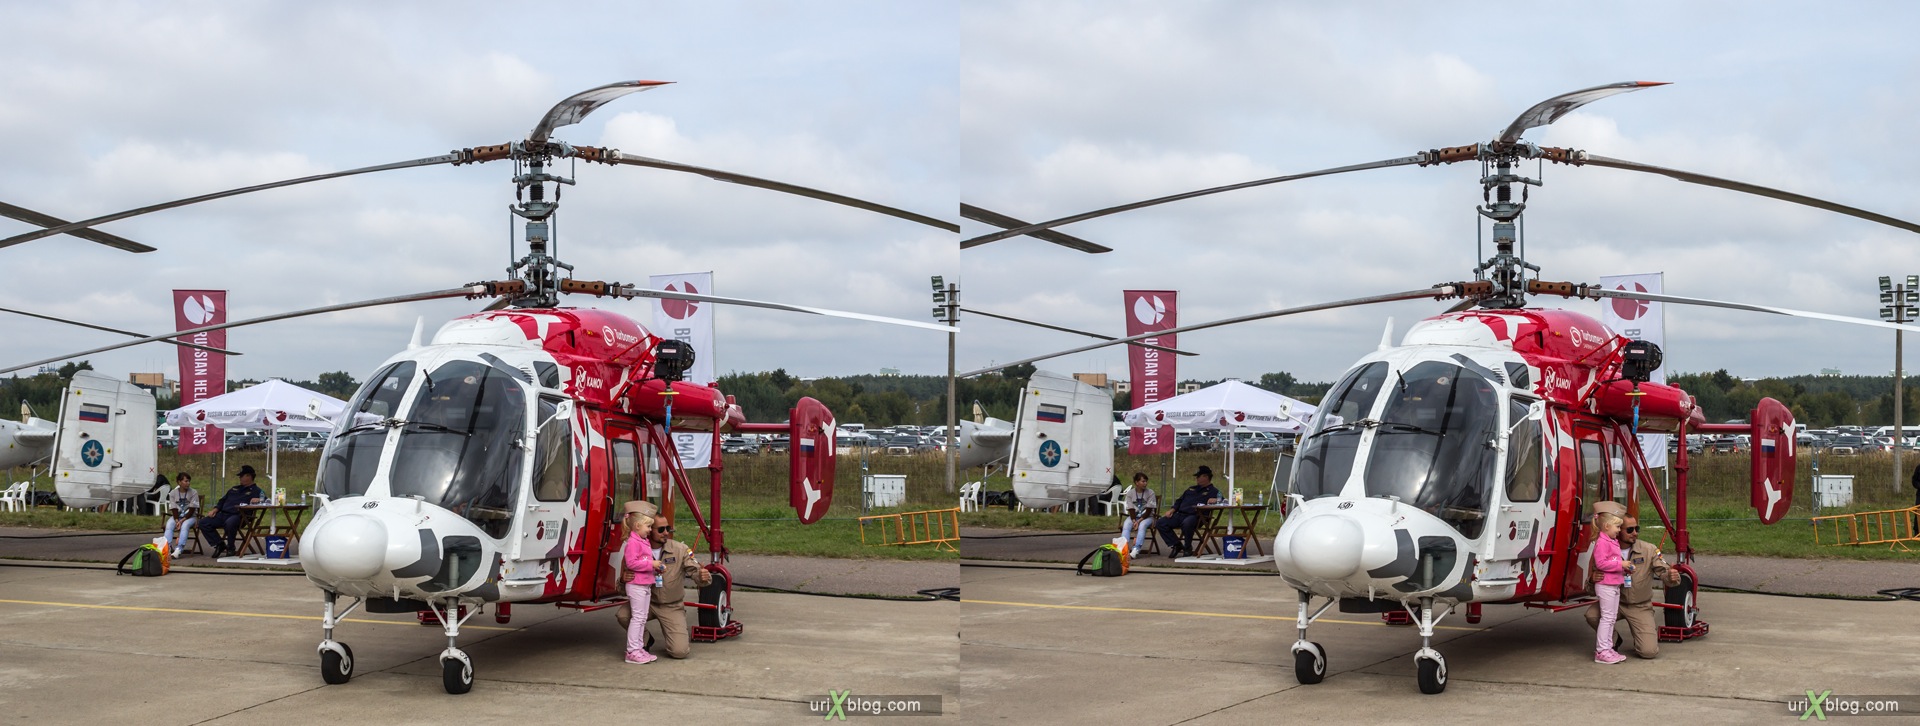 2013, MAKS, International Aviation and Space Salon, Russia, Ramenskoye airfield, Ka-226T, helicopter, 3D, stereo pair, cross-eyed, crossview, cross view stereo pair, stereoscopic